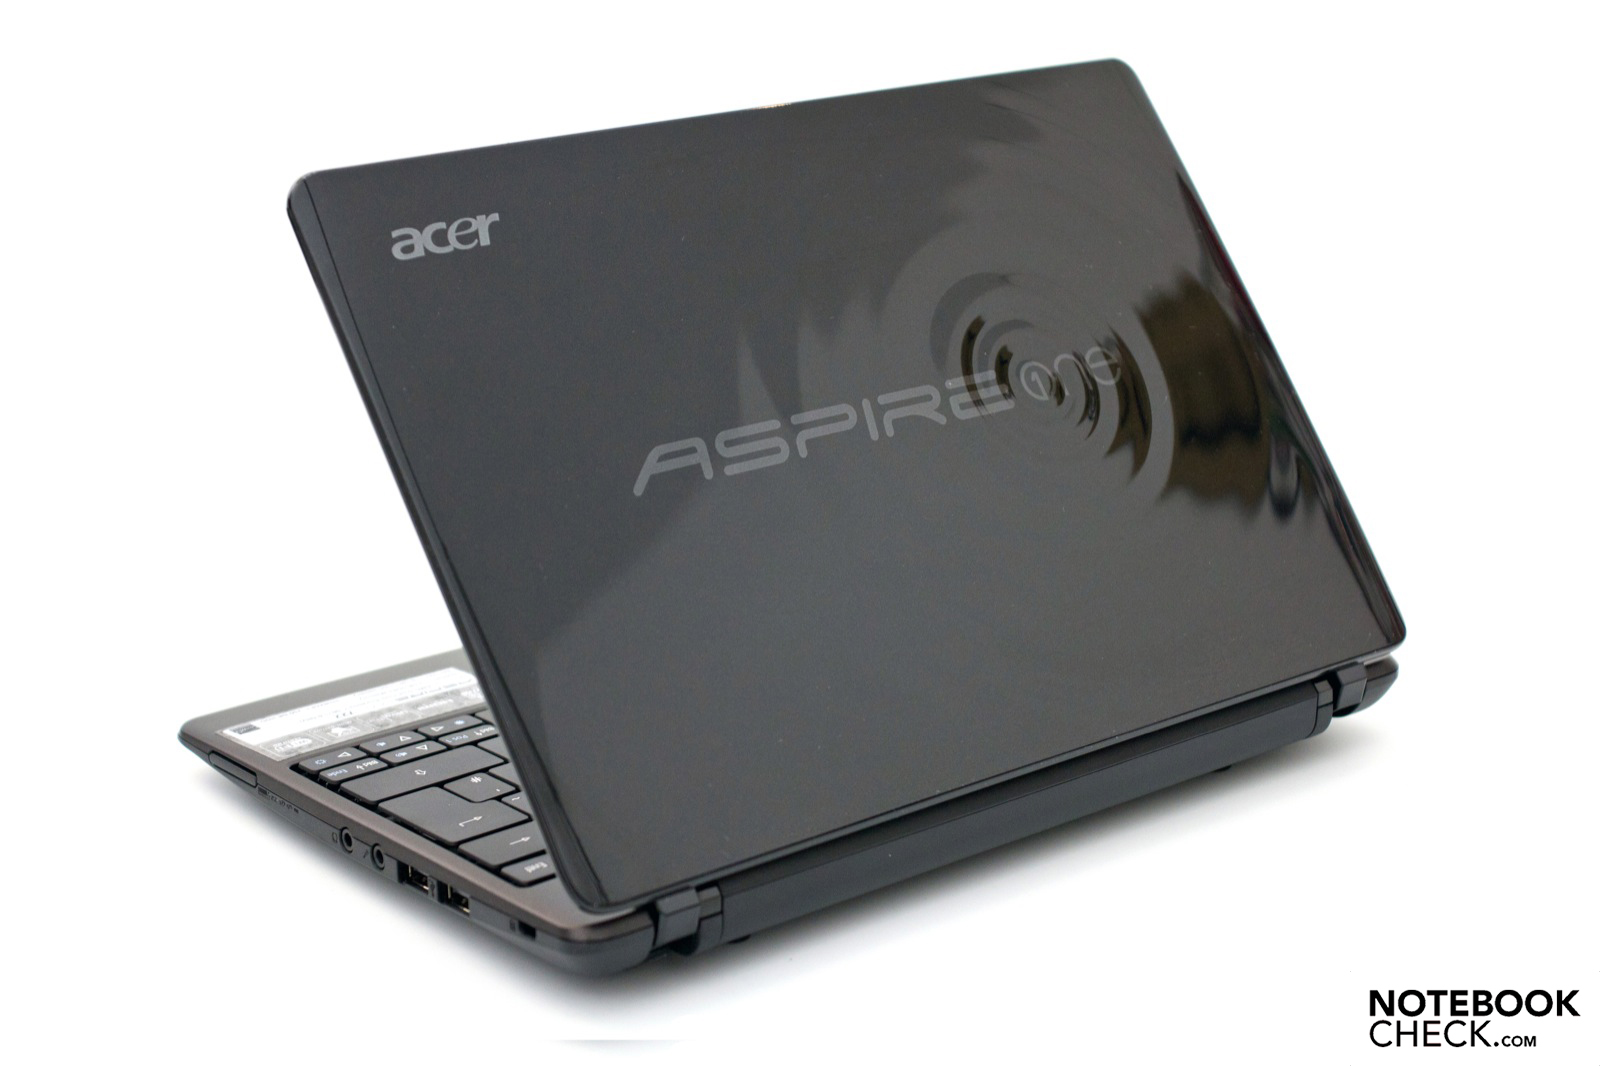 Interconectar Varios Brote Análisis del Netbook Acer Aspire One 722 - Notebookcheck.org